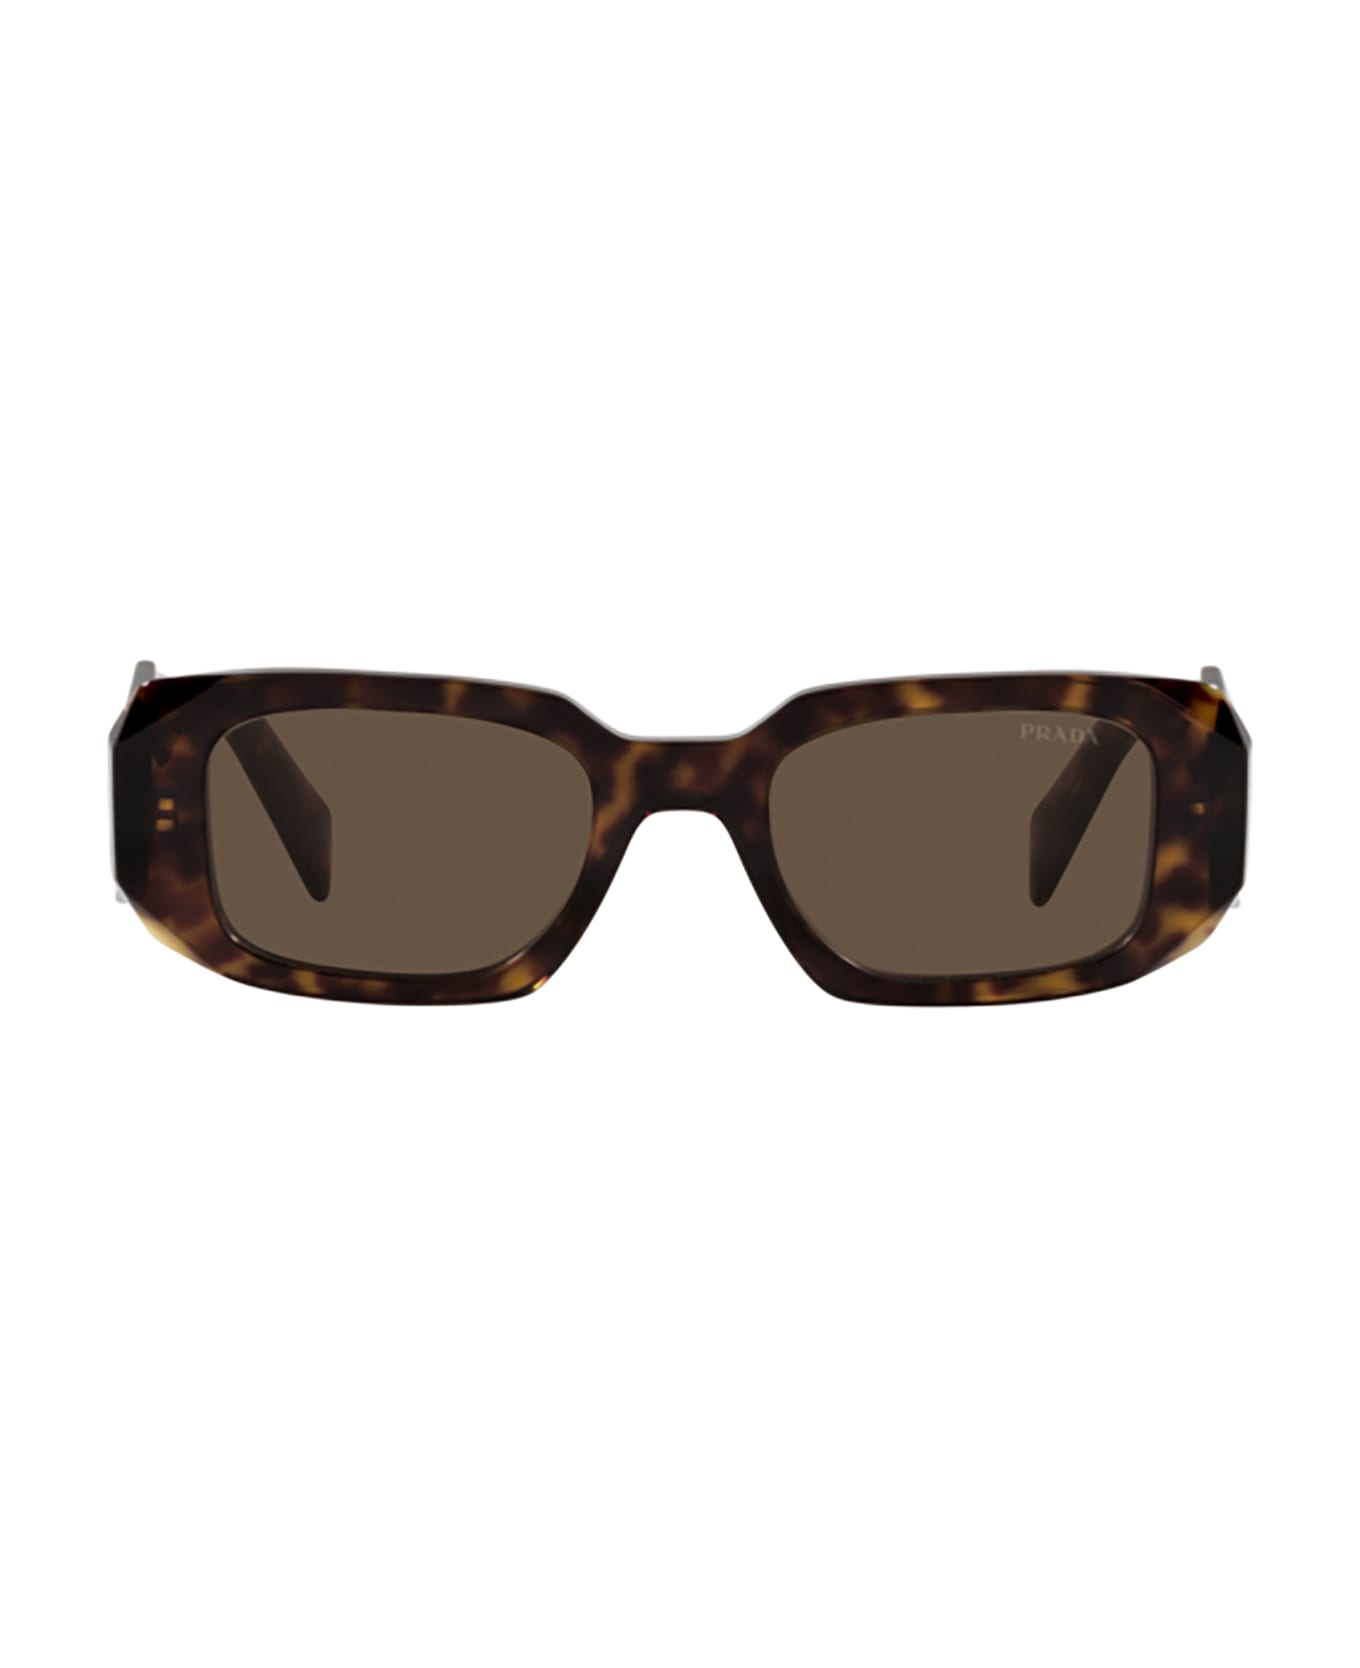 Prada Eyewear 17WS SOLE Sunglasses サングラス